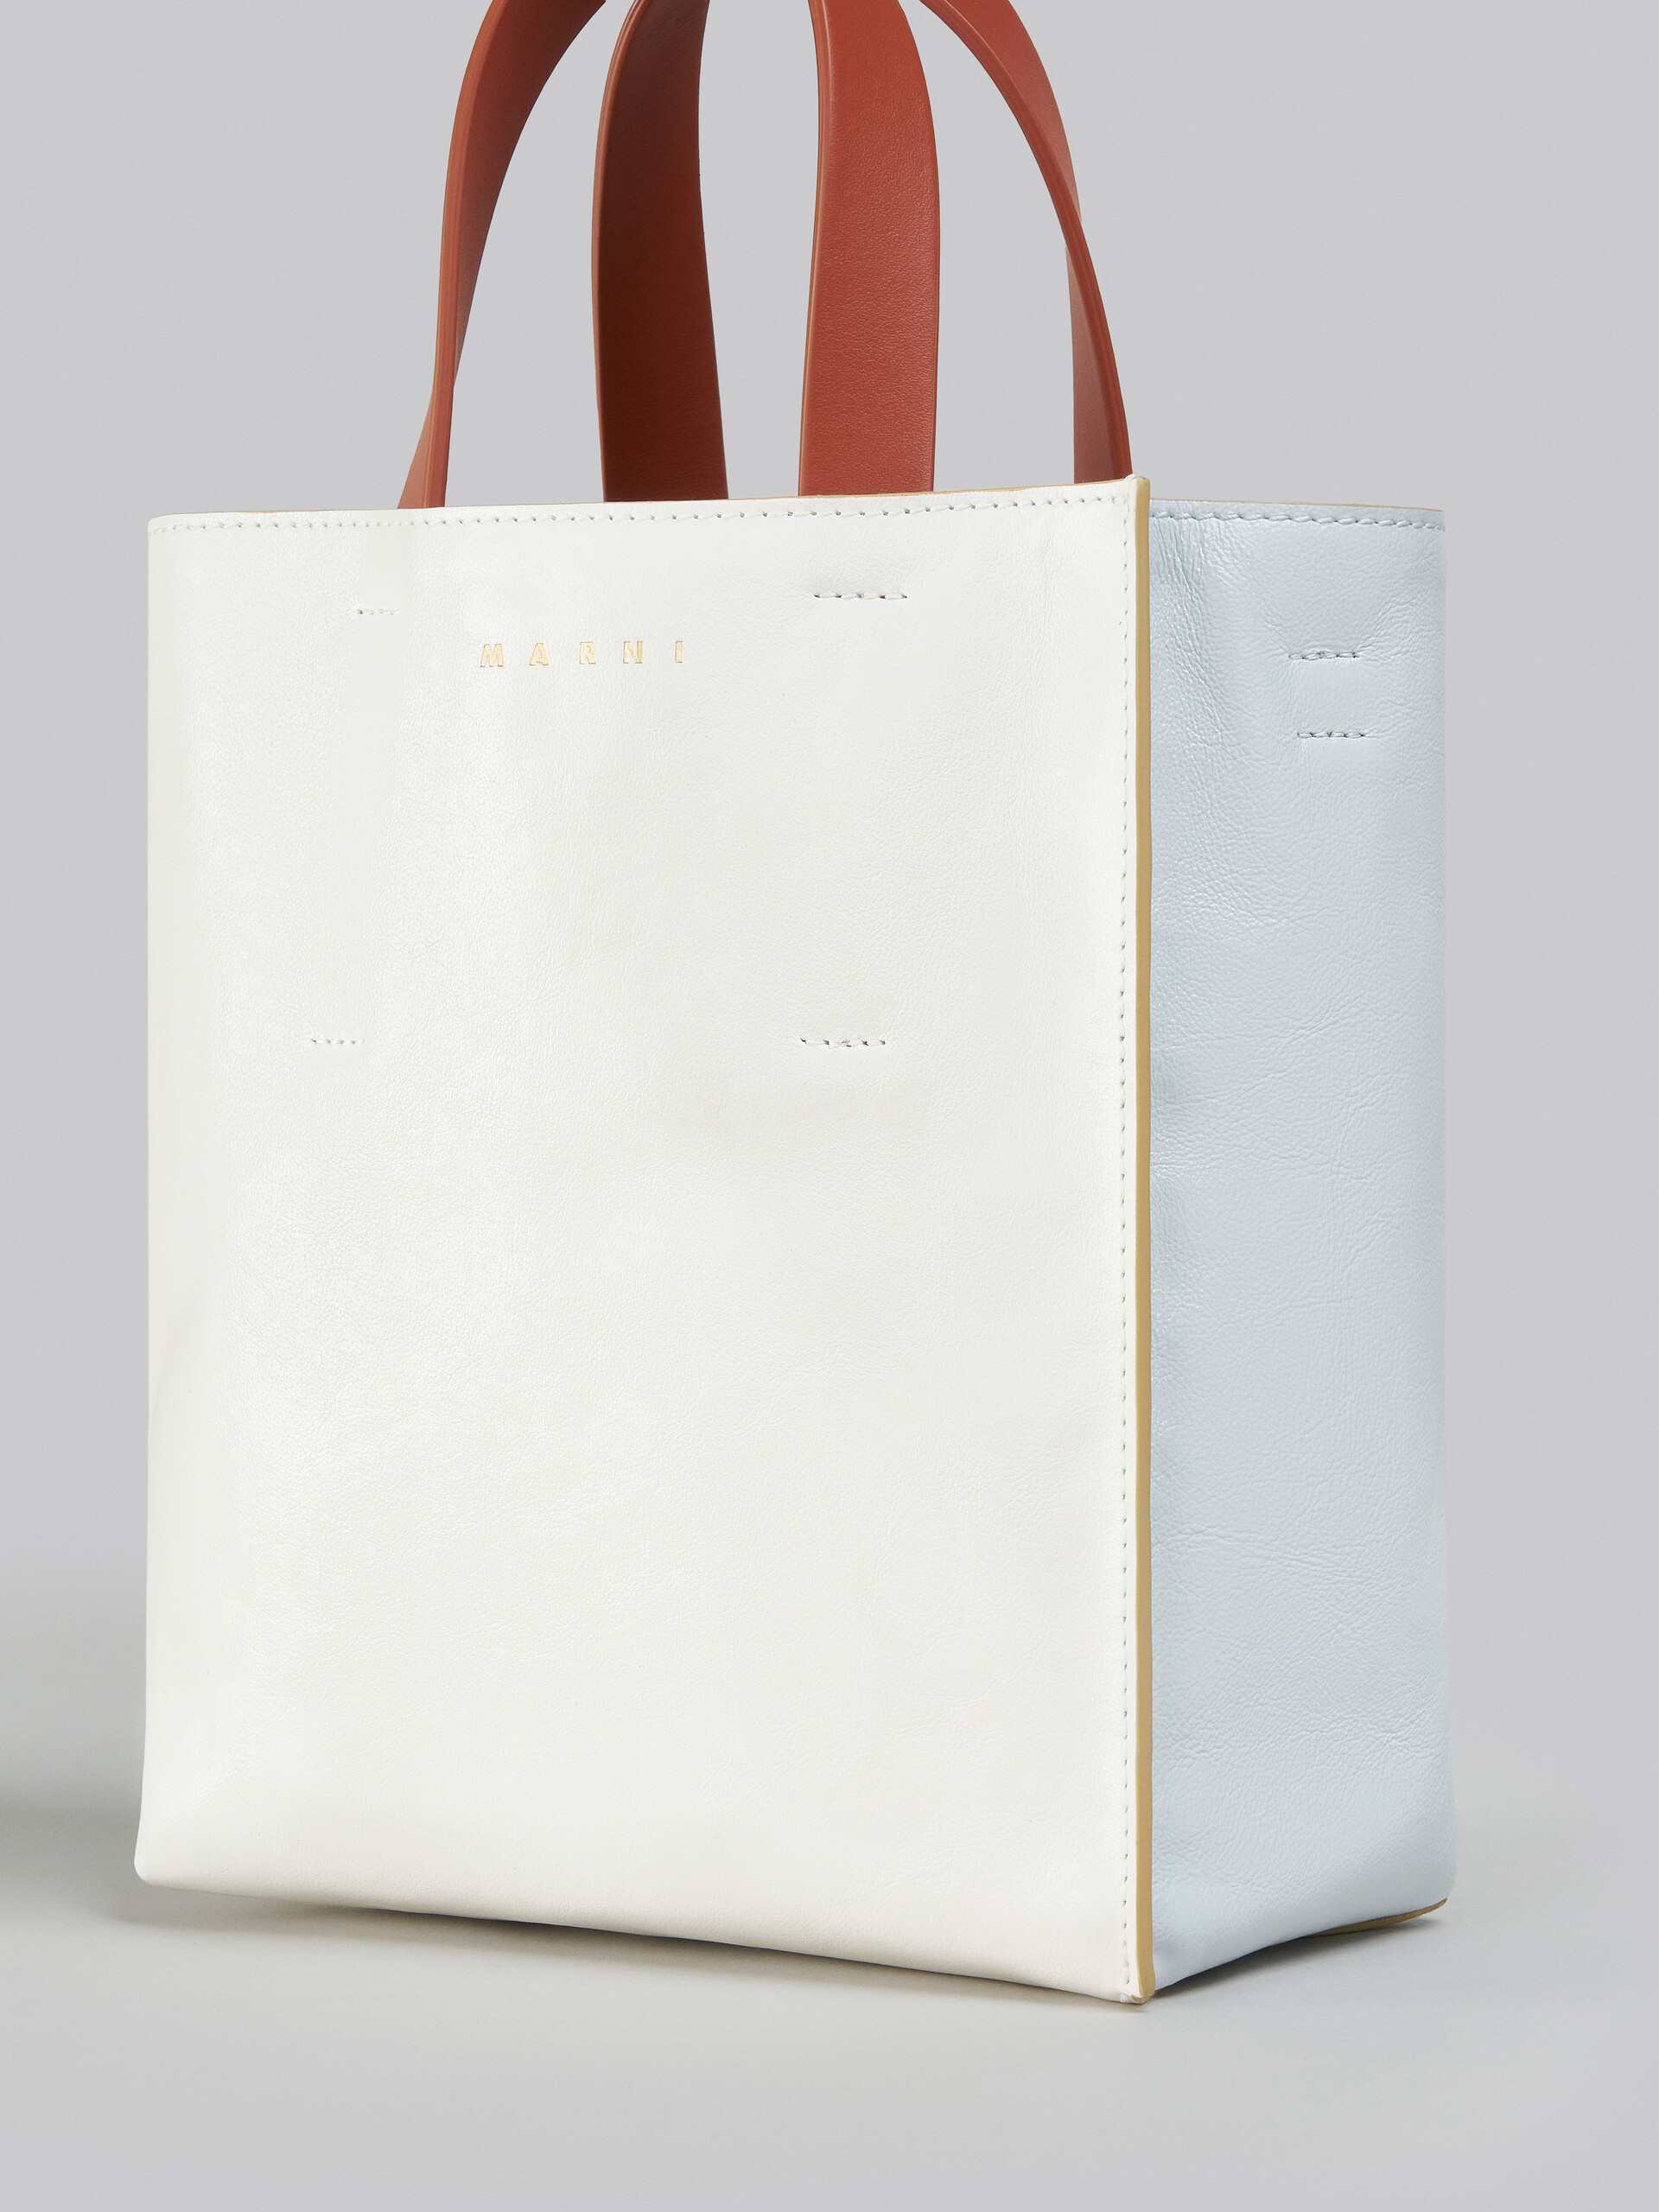 Museo Soft Bag Mini in pelle grigia nera e bordeaux - Borse shopping - Image 5